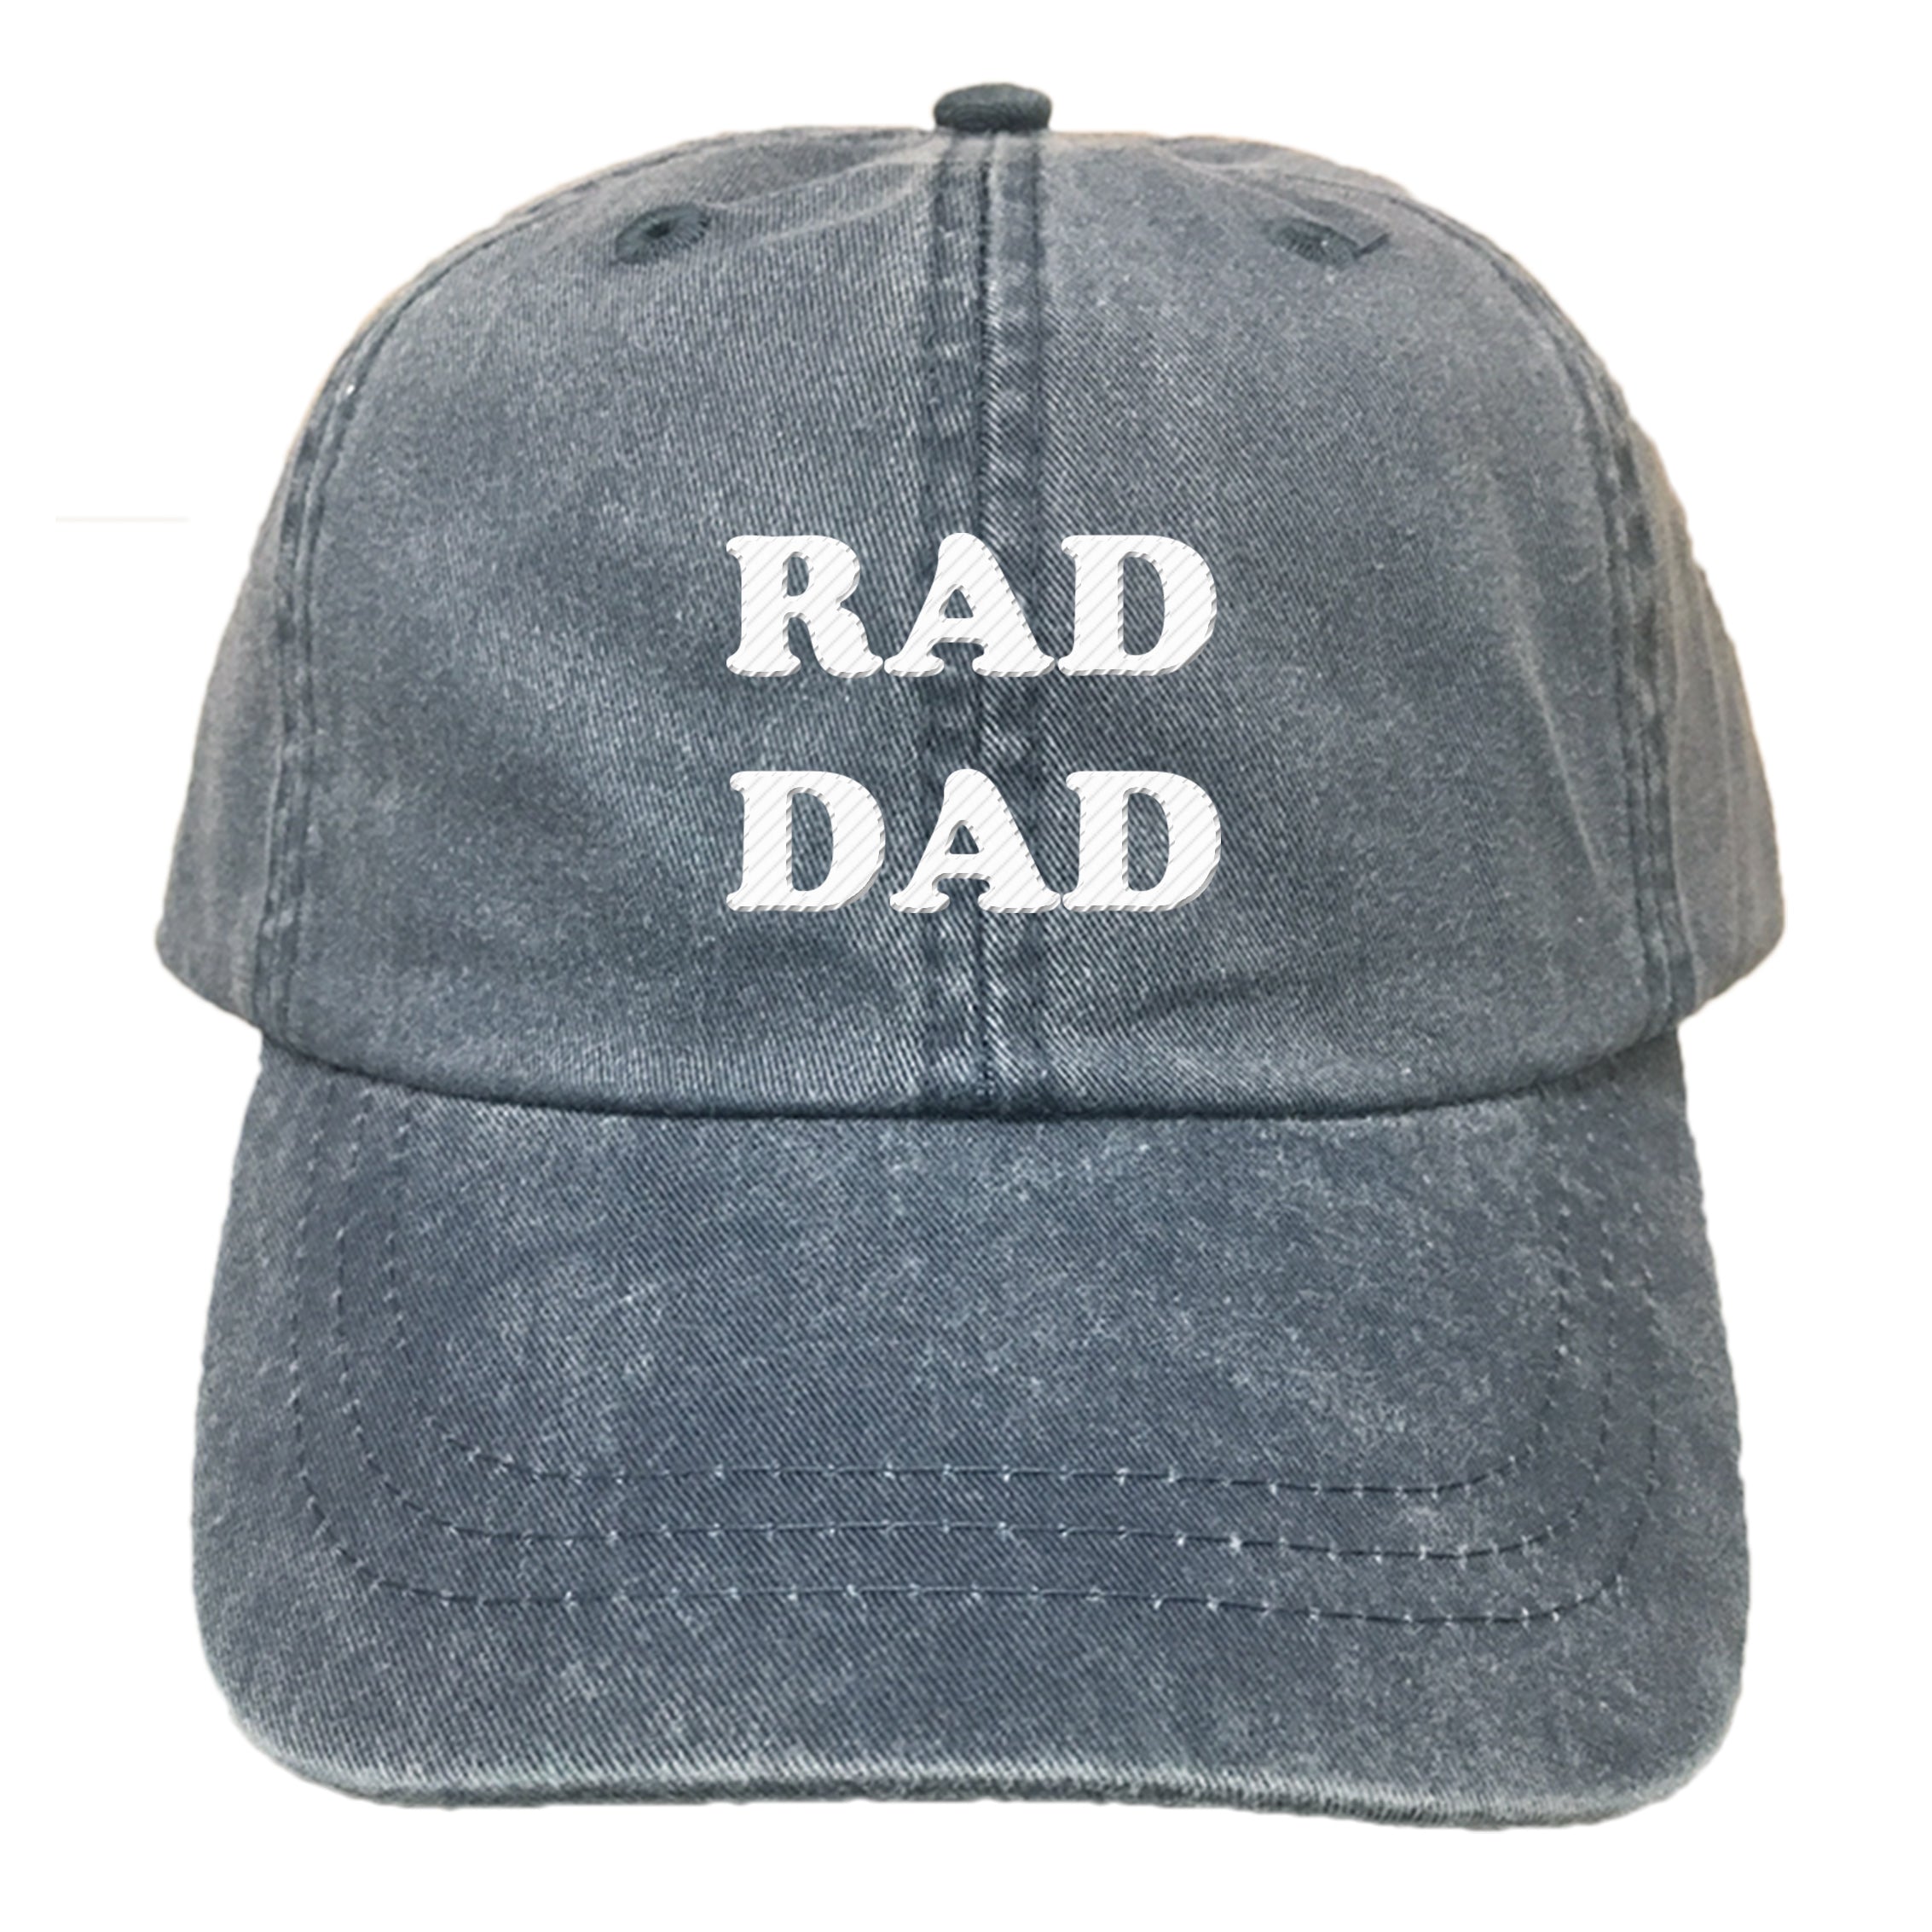 RAD DAD EMBROIDERED Cotton Twill HAT